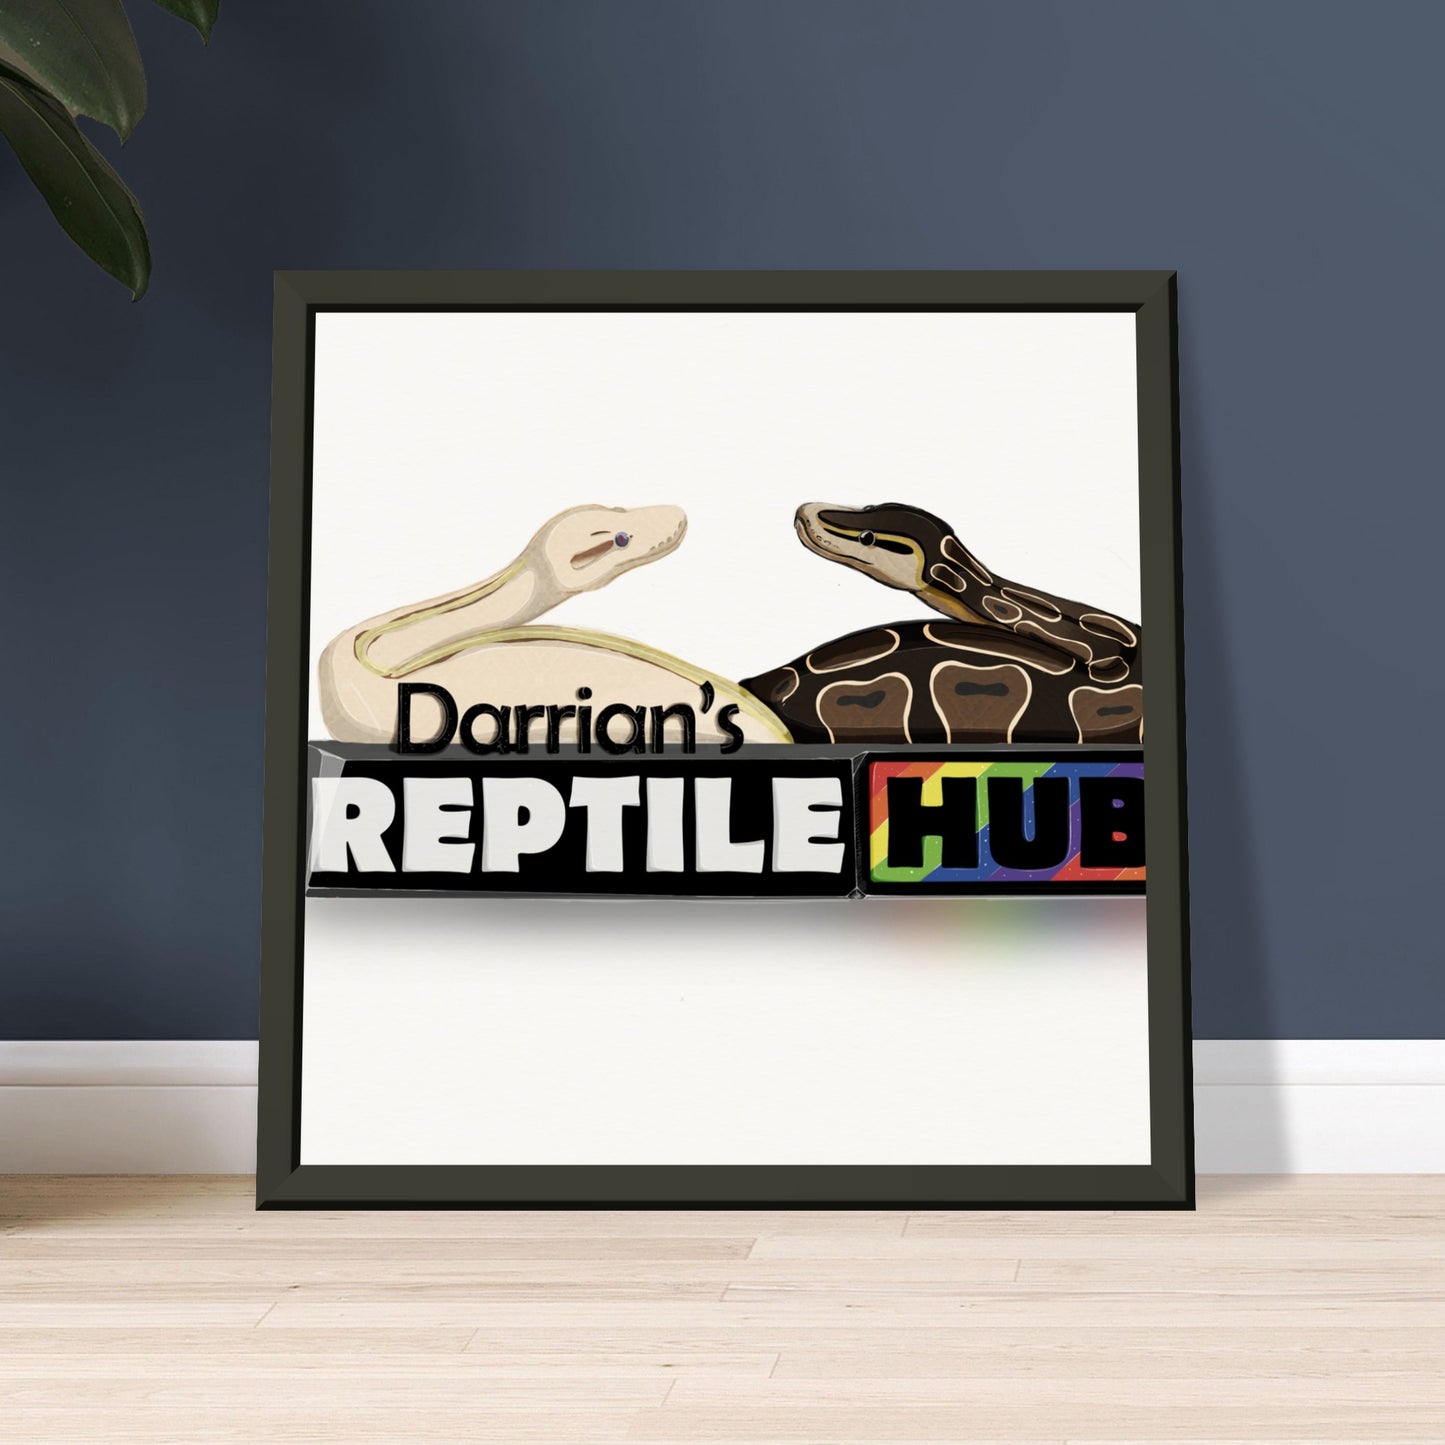 Darrian's Reptile Hub - Museum-Quality Matte Paper Metal Framed Poster